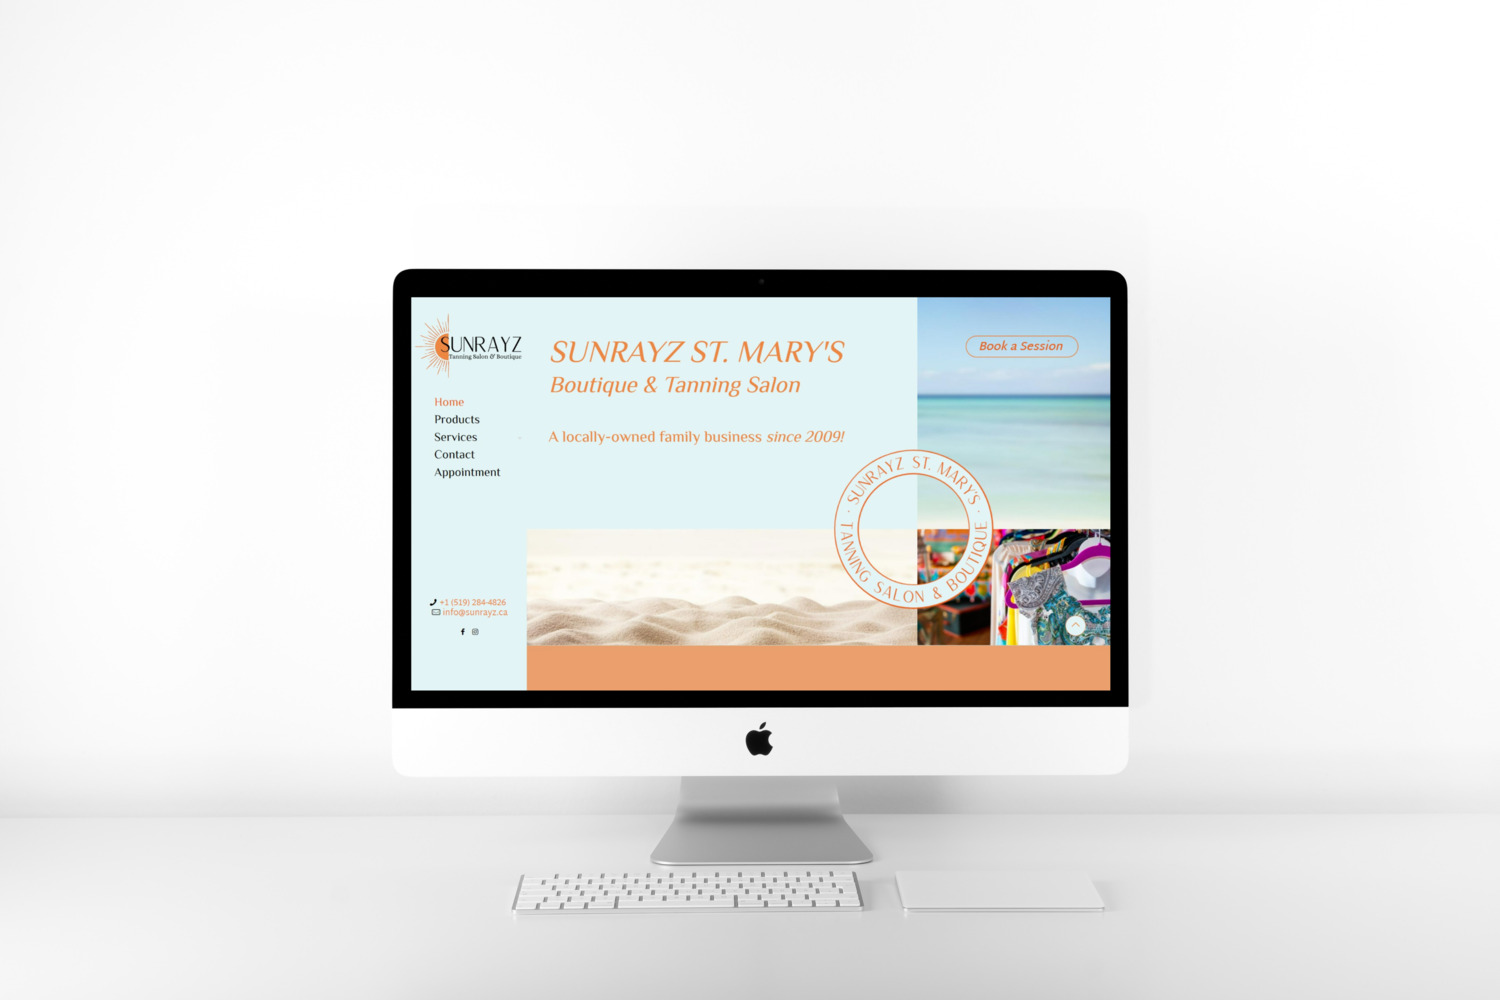 SunRayz Small Business Website